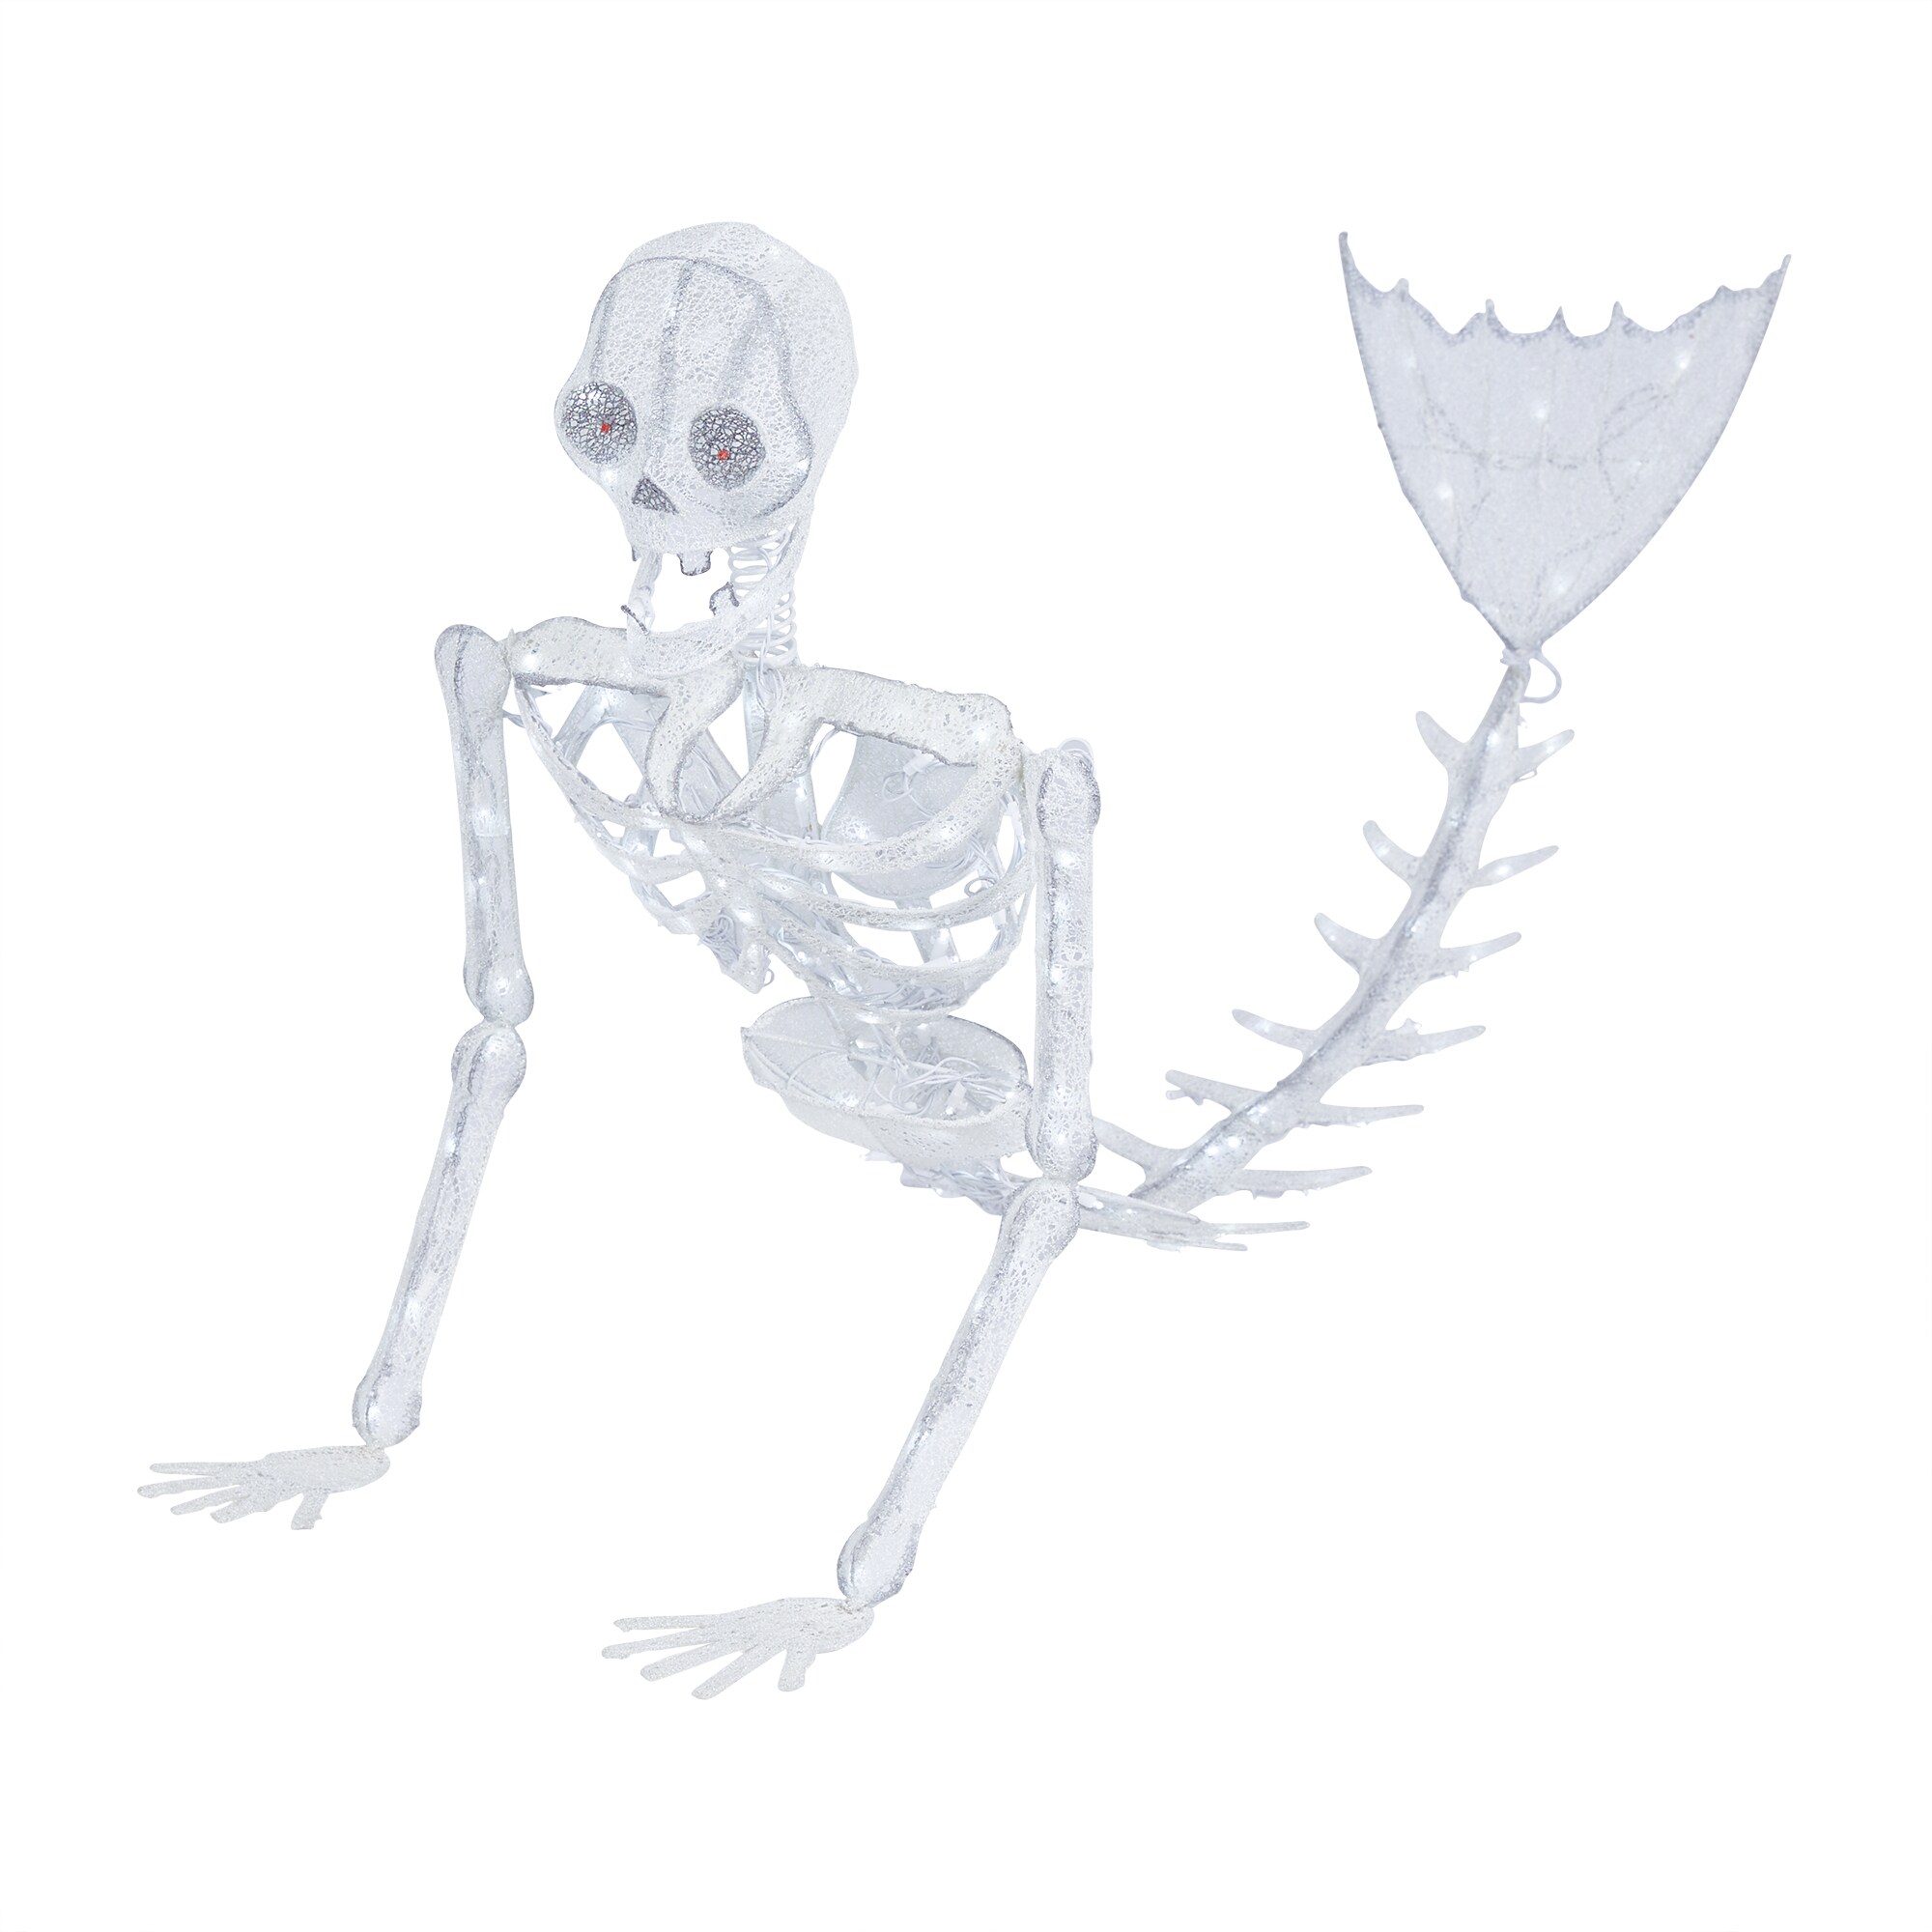 3.94 x 16 inches Darice Halloween Mermaid Skeleton Decor 